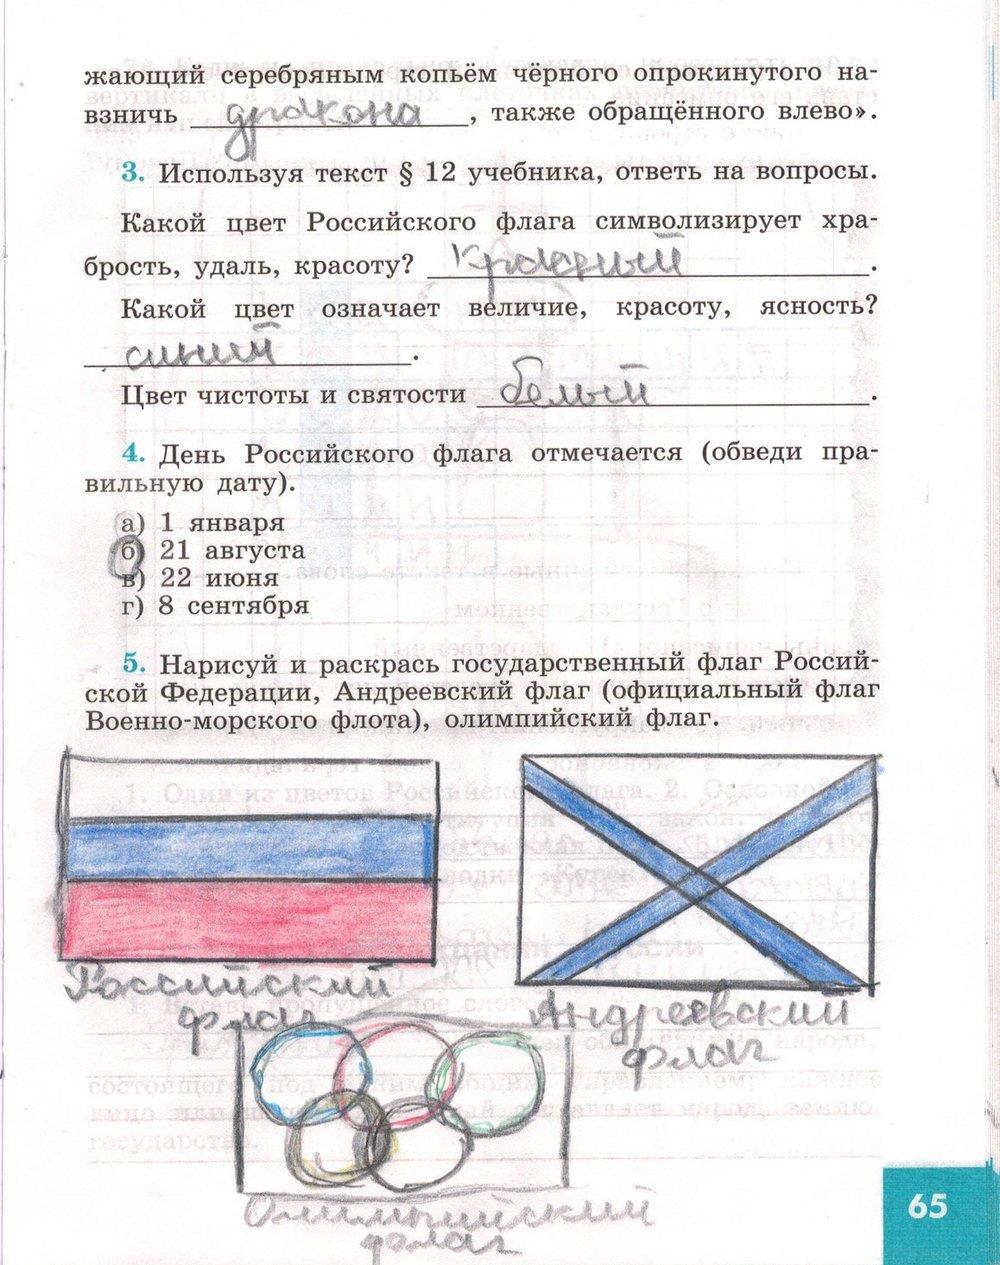 гдз 5 класс рабочая тетрадь страница 65 обществознание Иванова, Хотеенкова